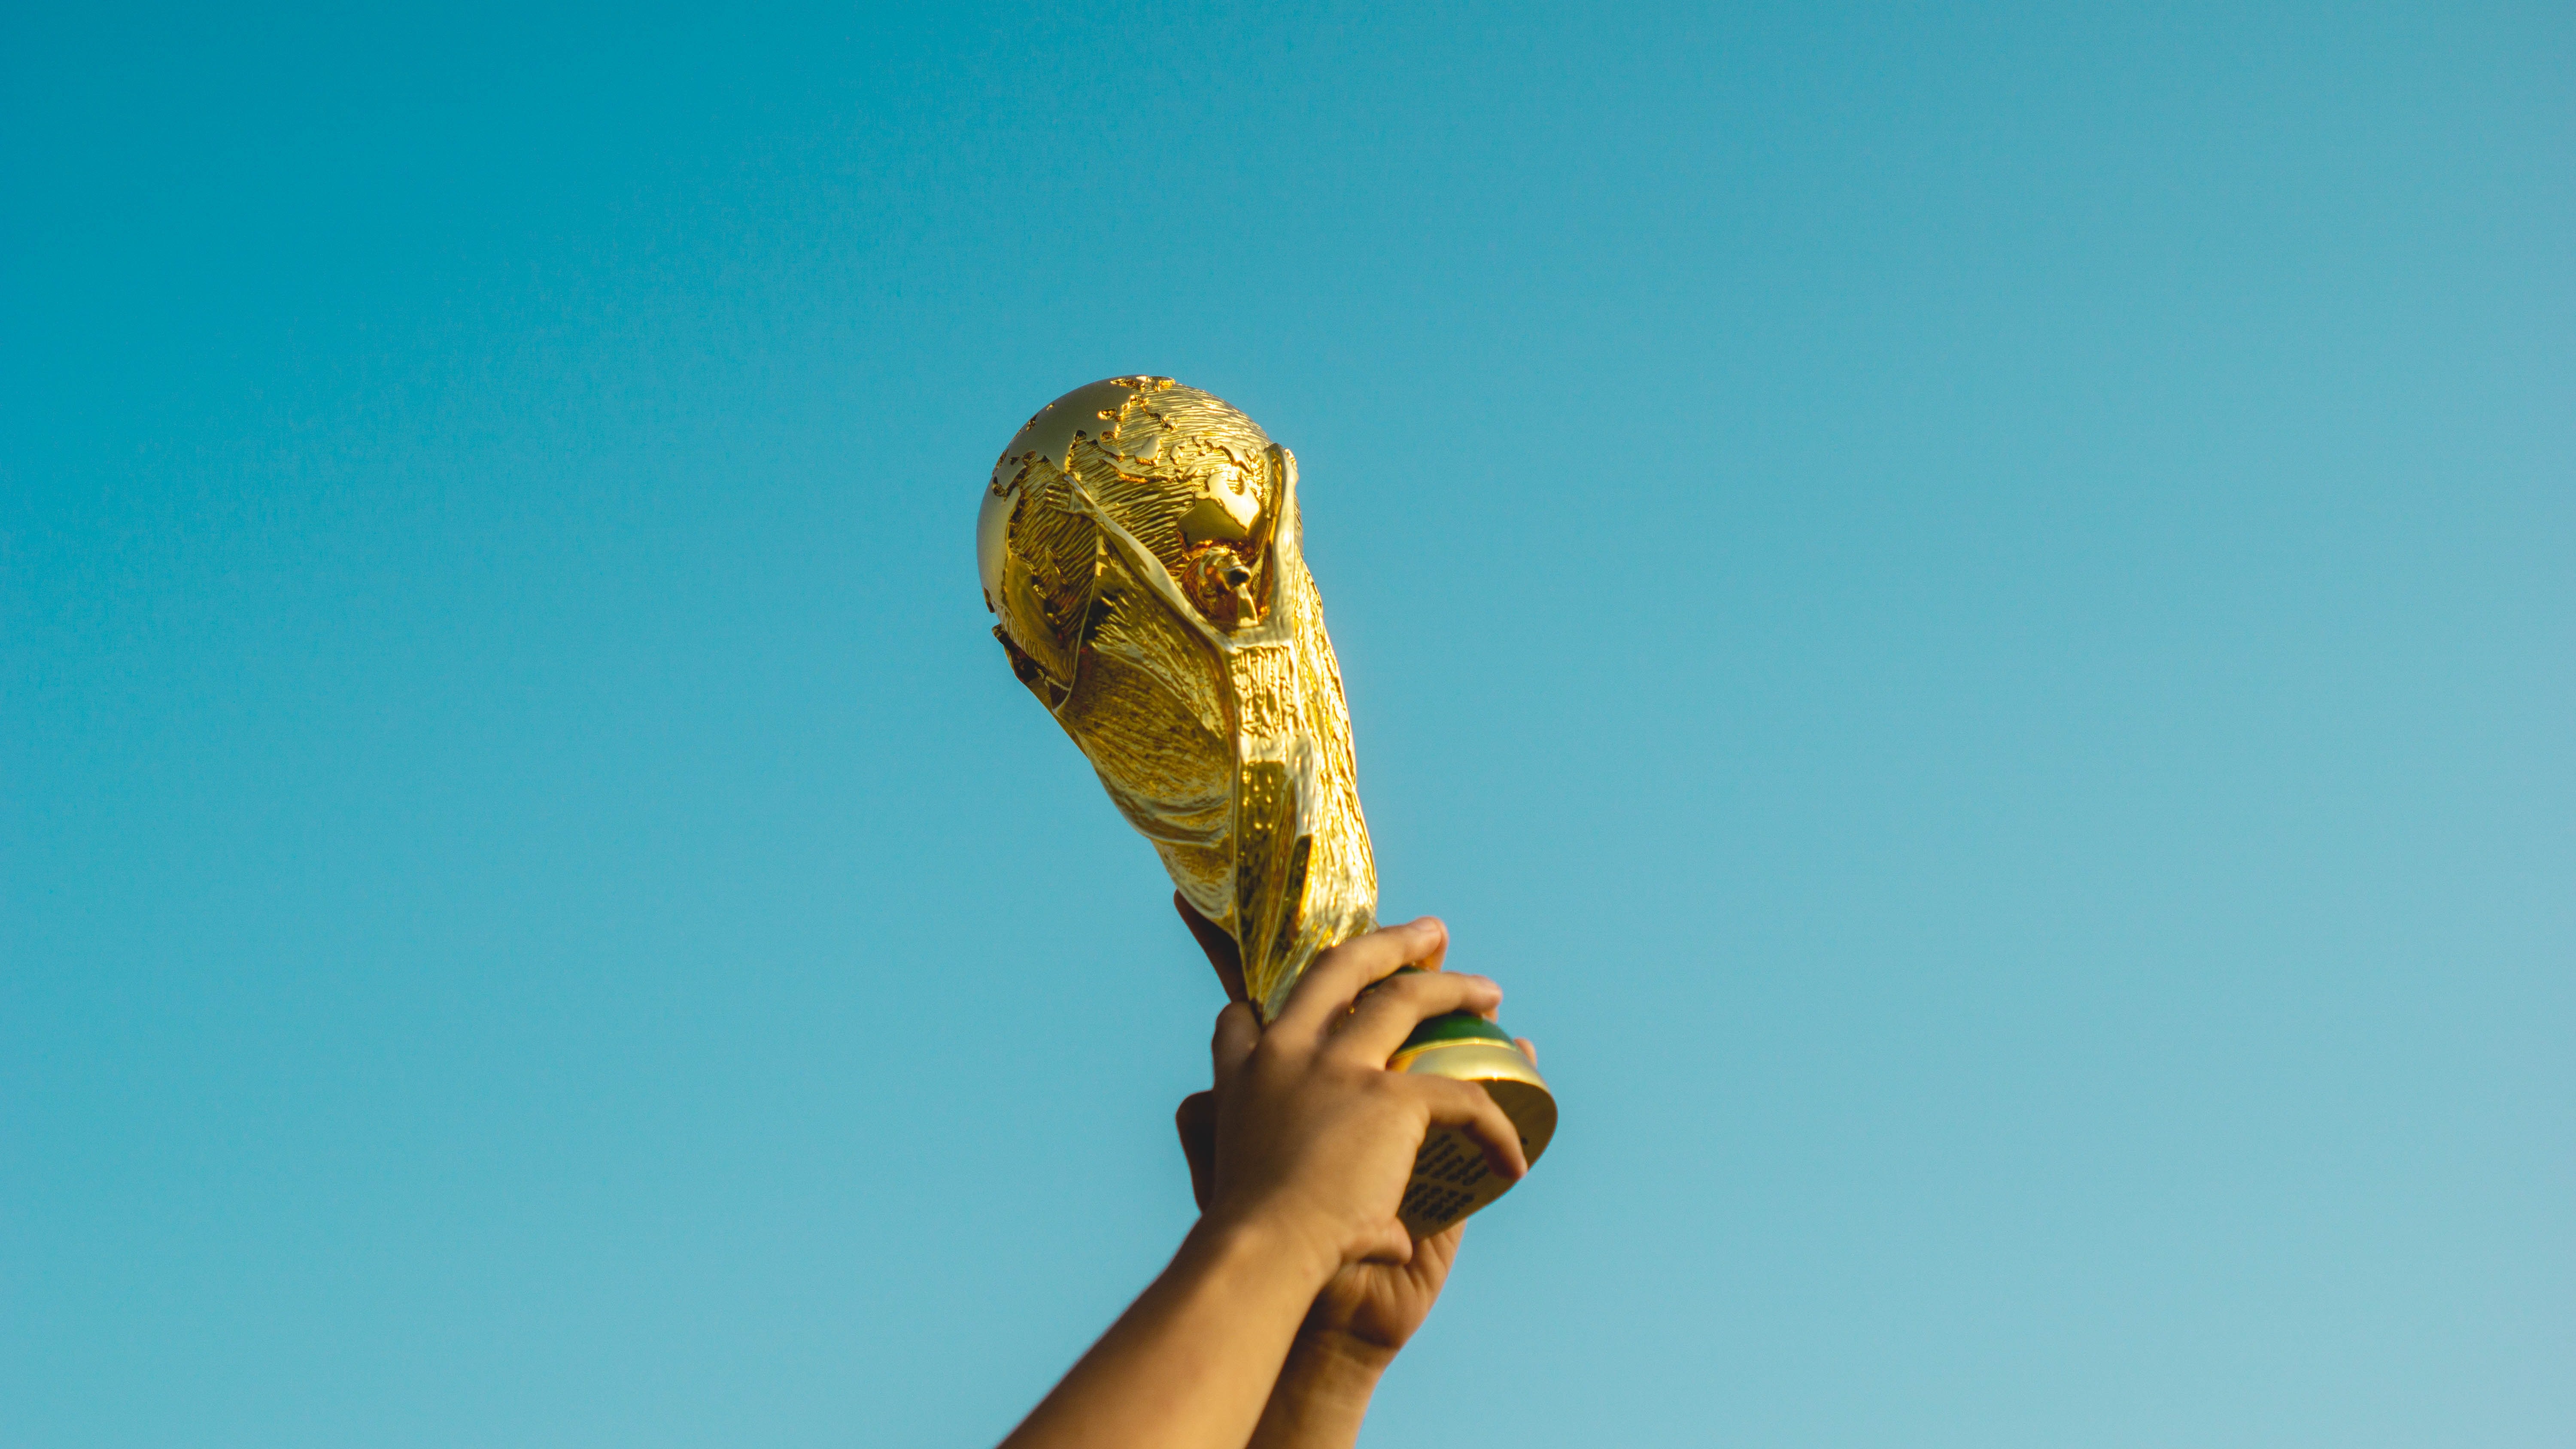 Taça da Copa do Mundo (Foto: Divulgação / Fauzan Saari no Unsplash)